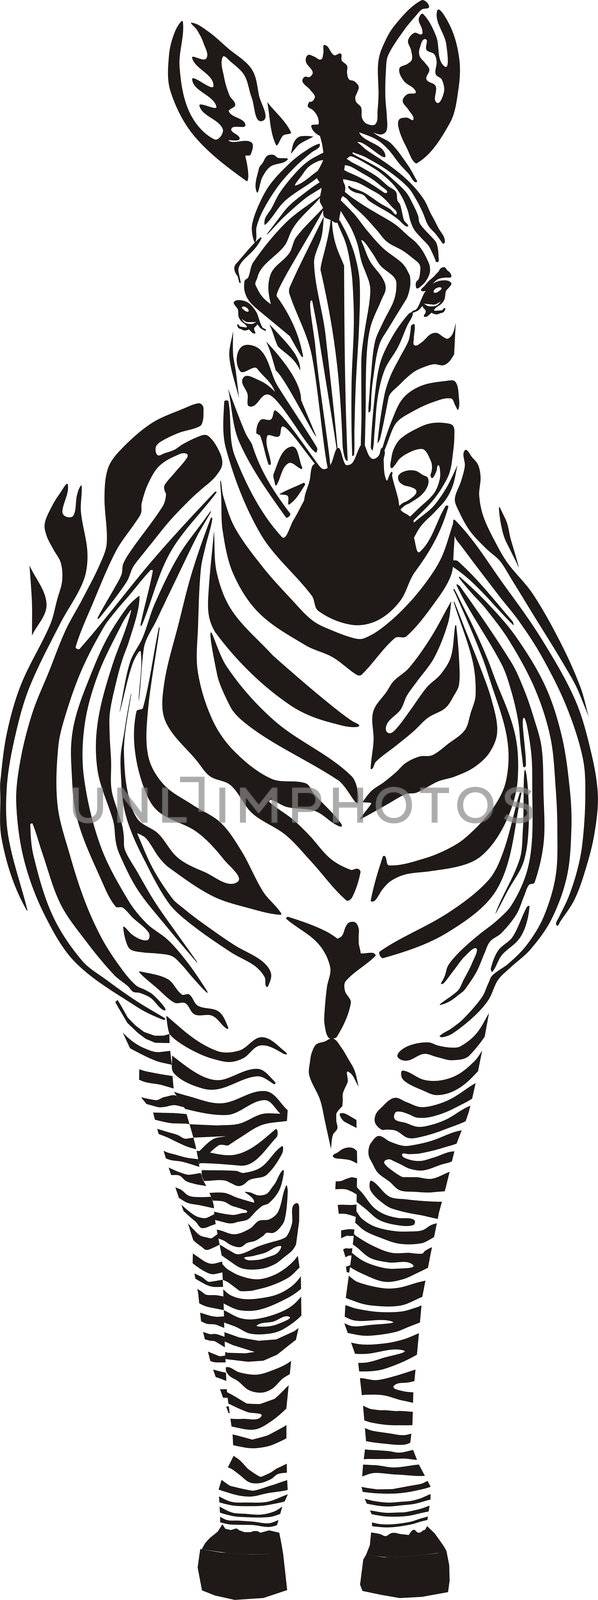 Zebra - vector illustration front view, black and zero